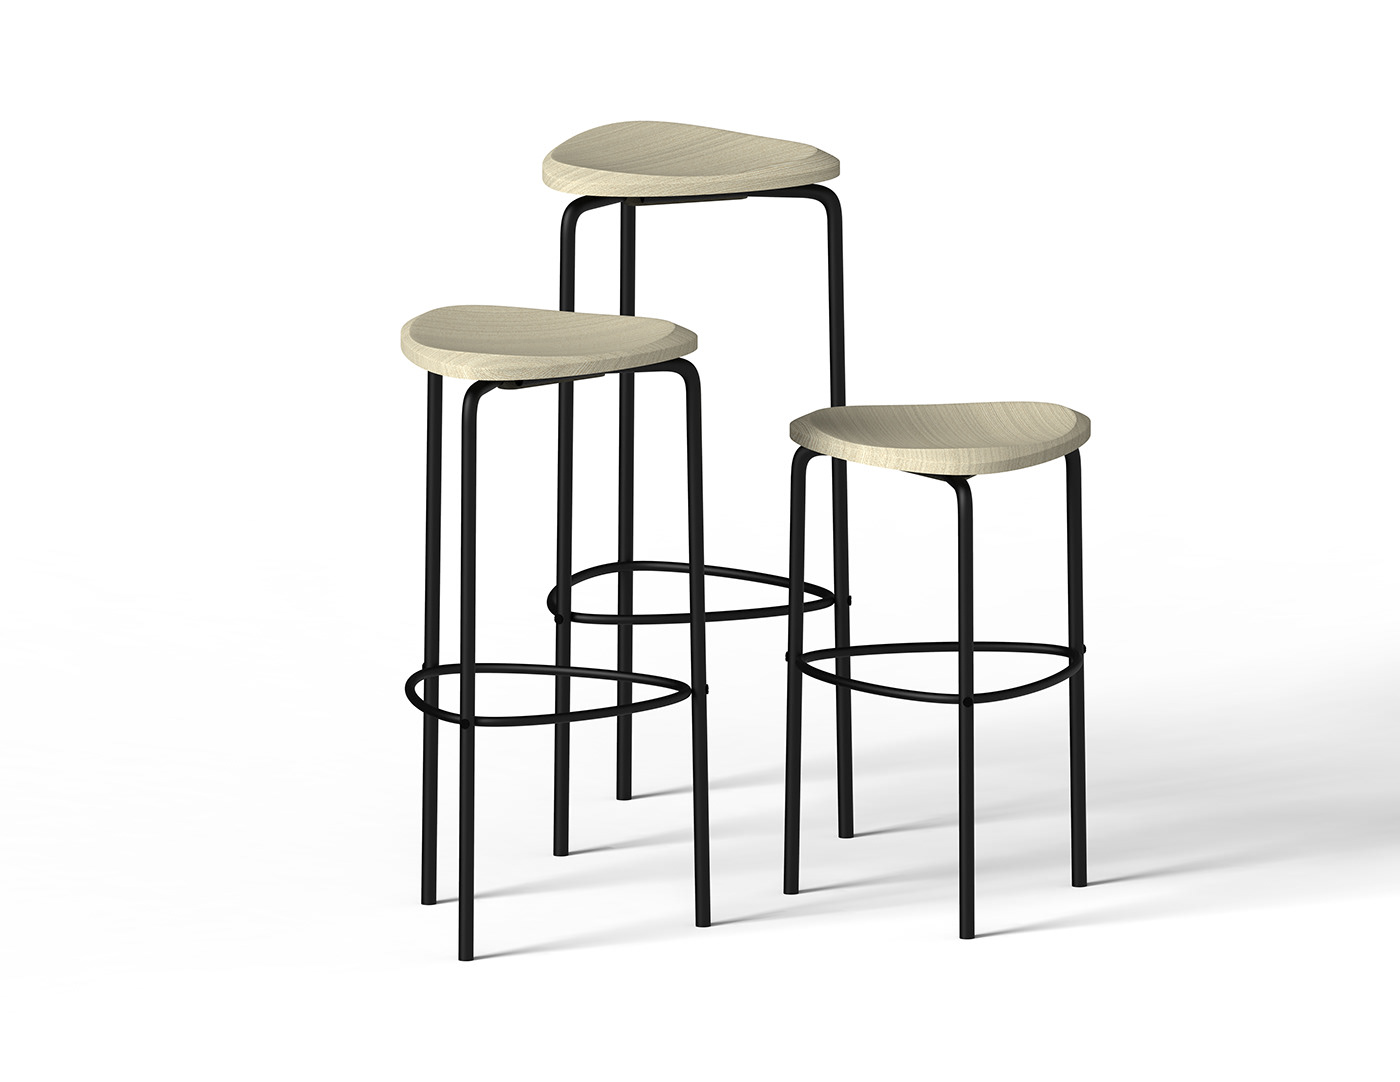 cnc design elegance furniture guest seating keyshot stools Sustainability